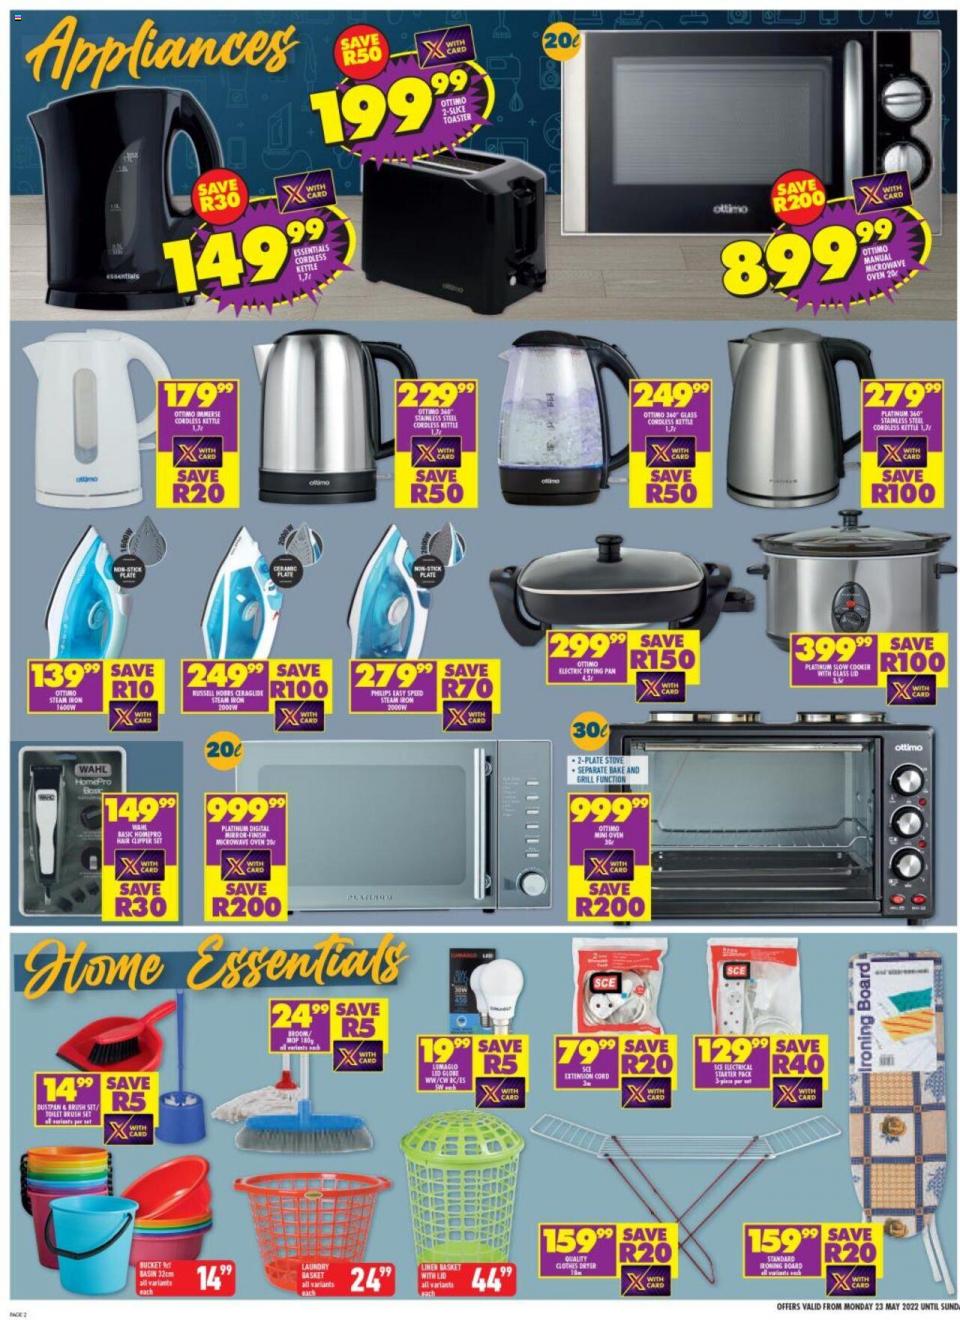 Shoprite Specials Small Appliance May 2022 Shoprite Catalogue SA